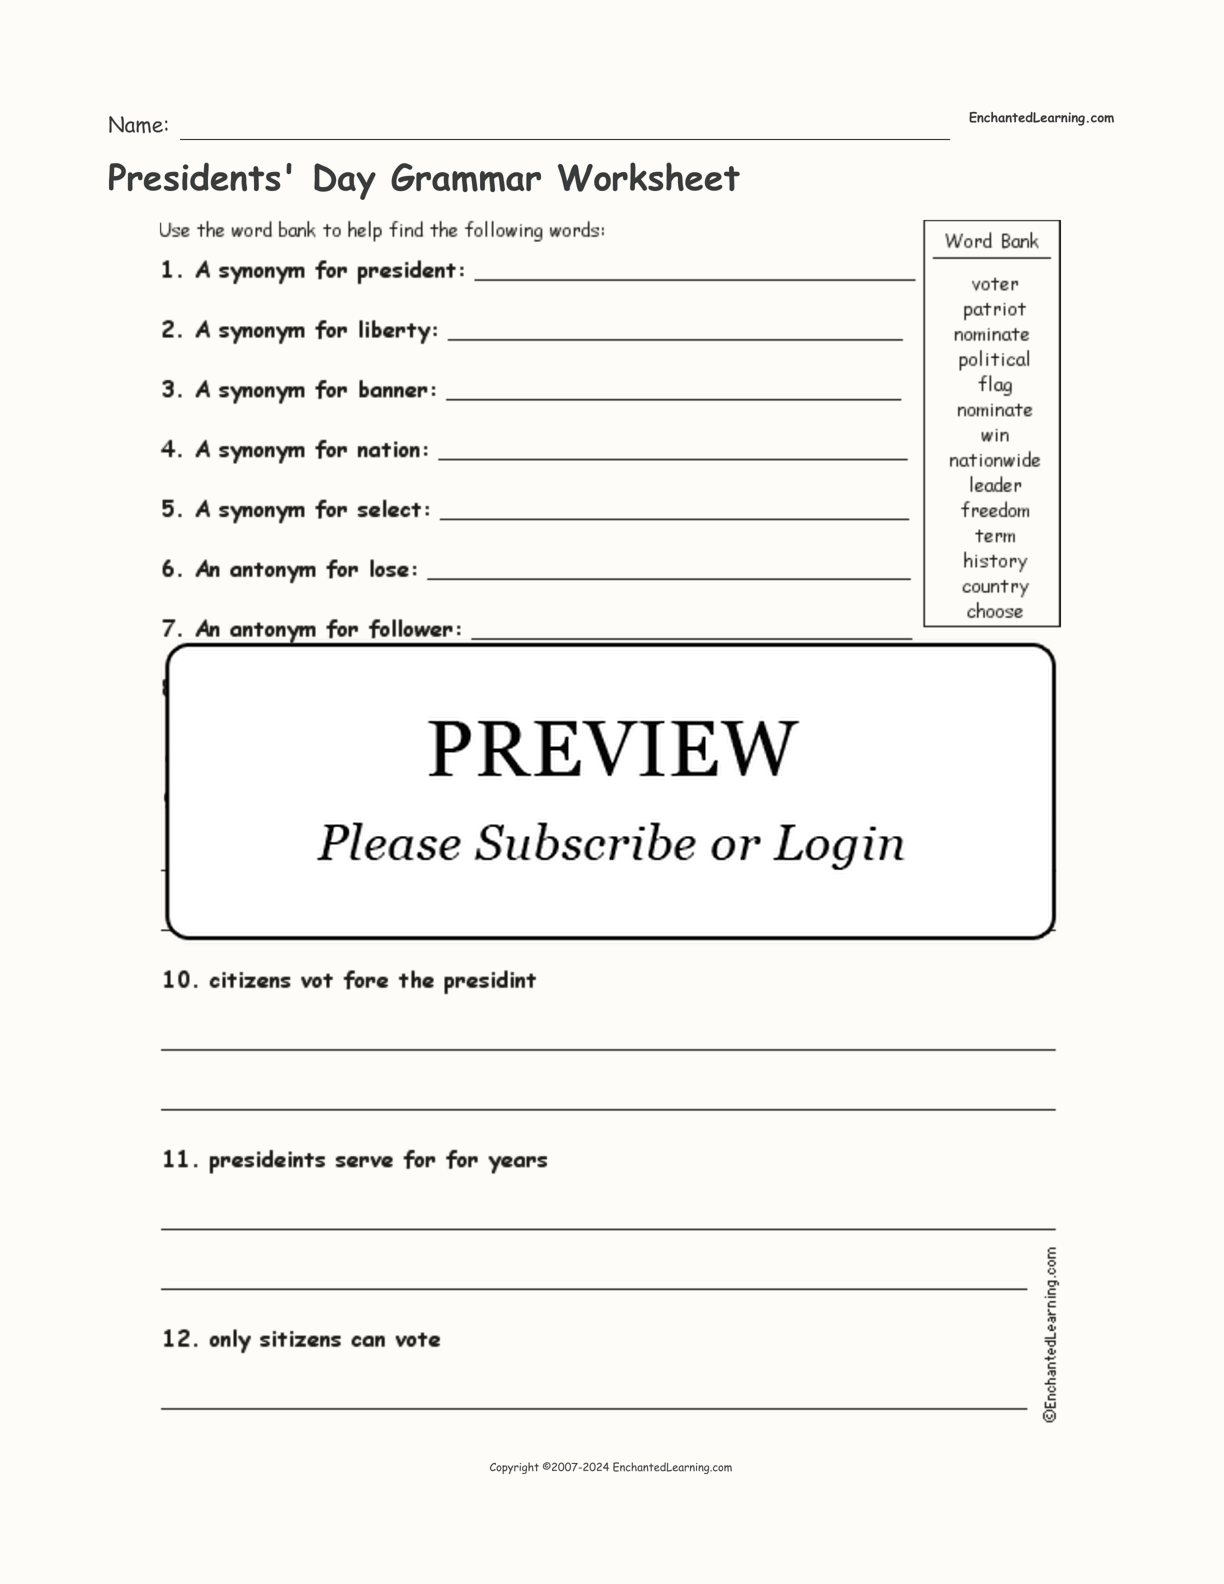 Presidents' Day Grammar Worksheet interactive worksheet page 1